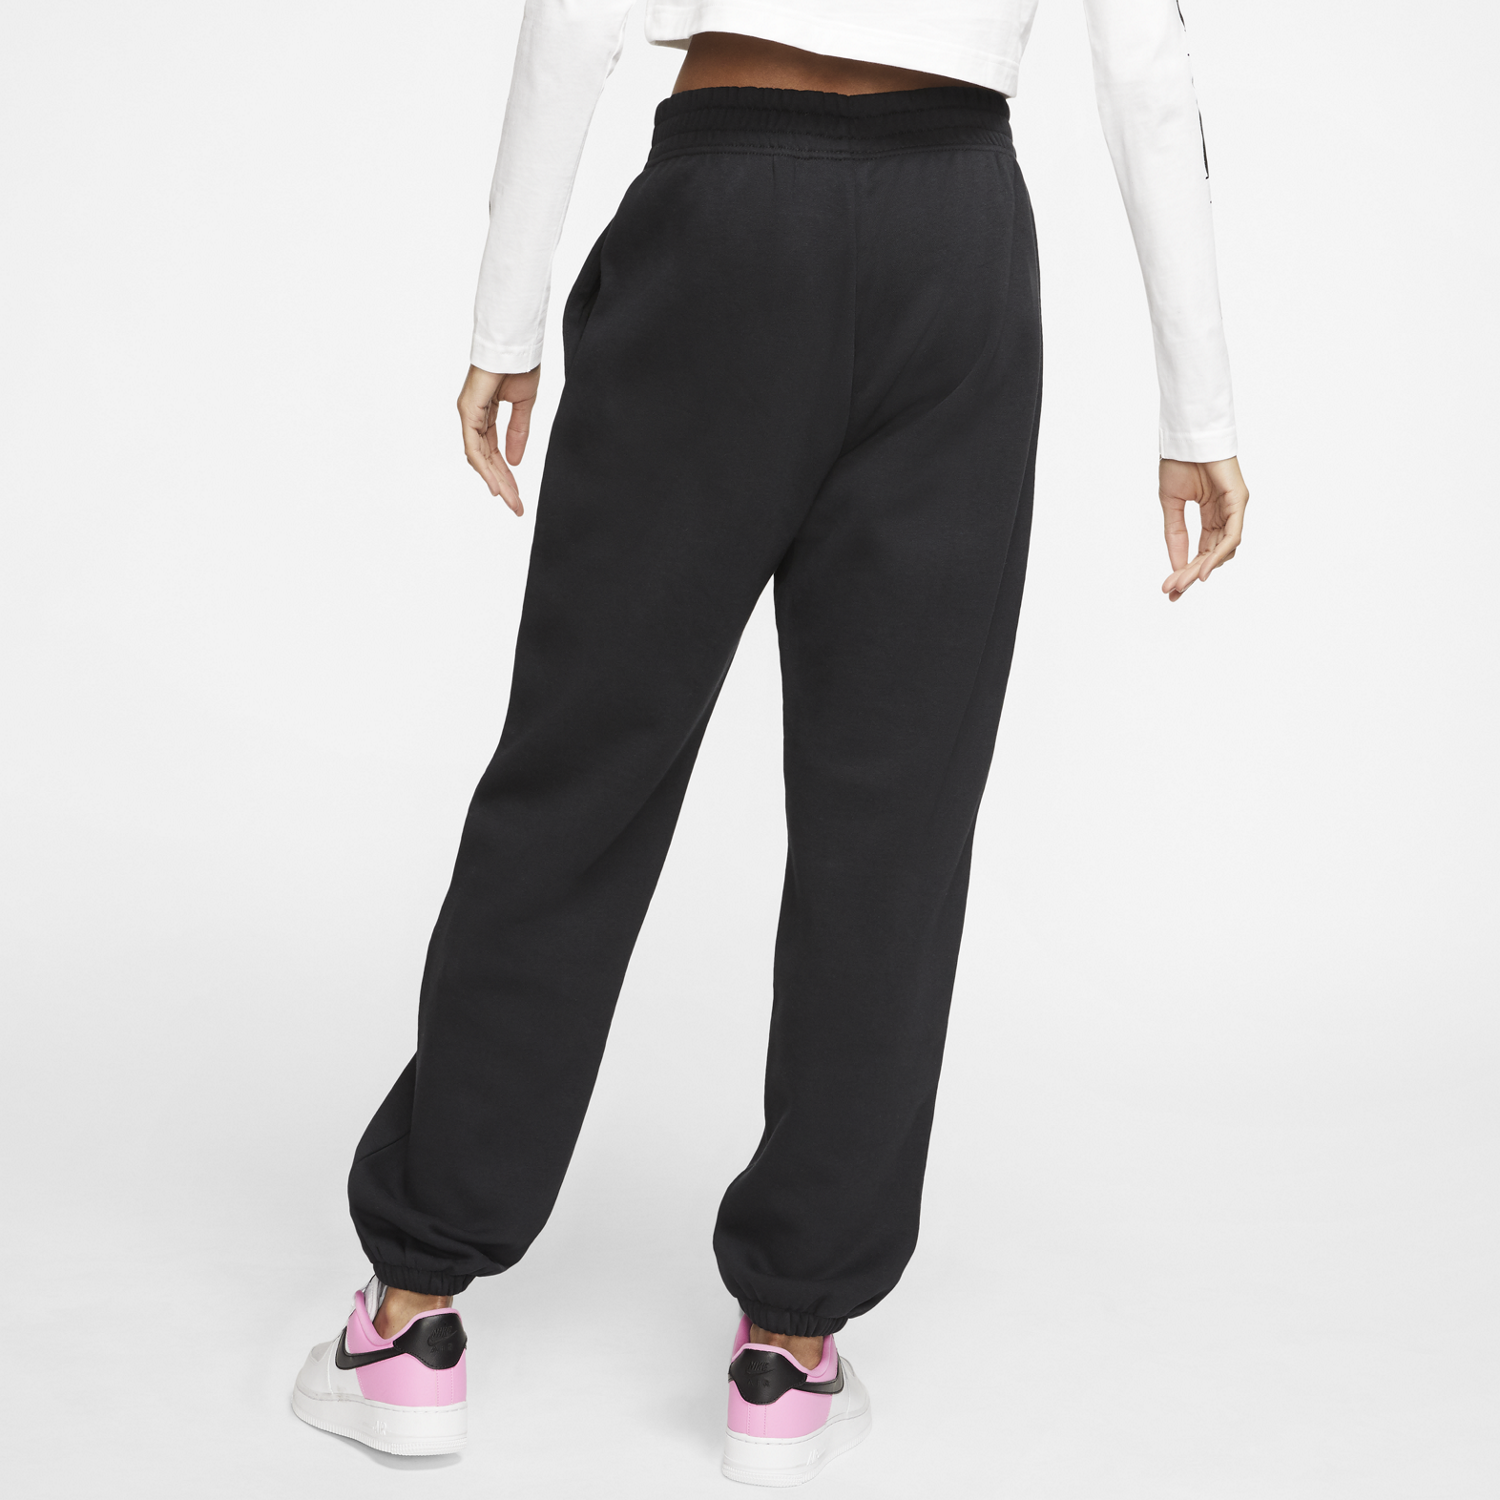 Nike Women's NSW Open Hem Fleece Pant Varsity, Charcoal  Heather/Anthracite/White, Large